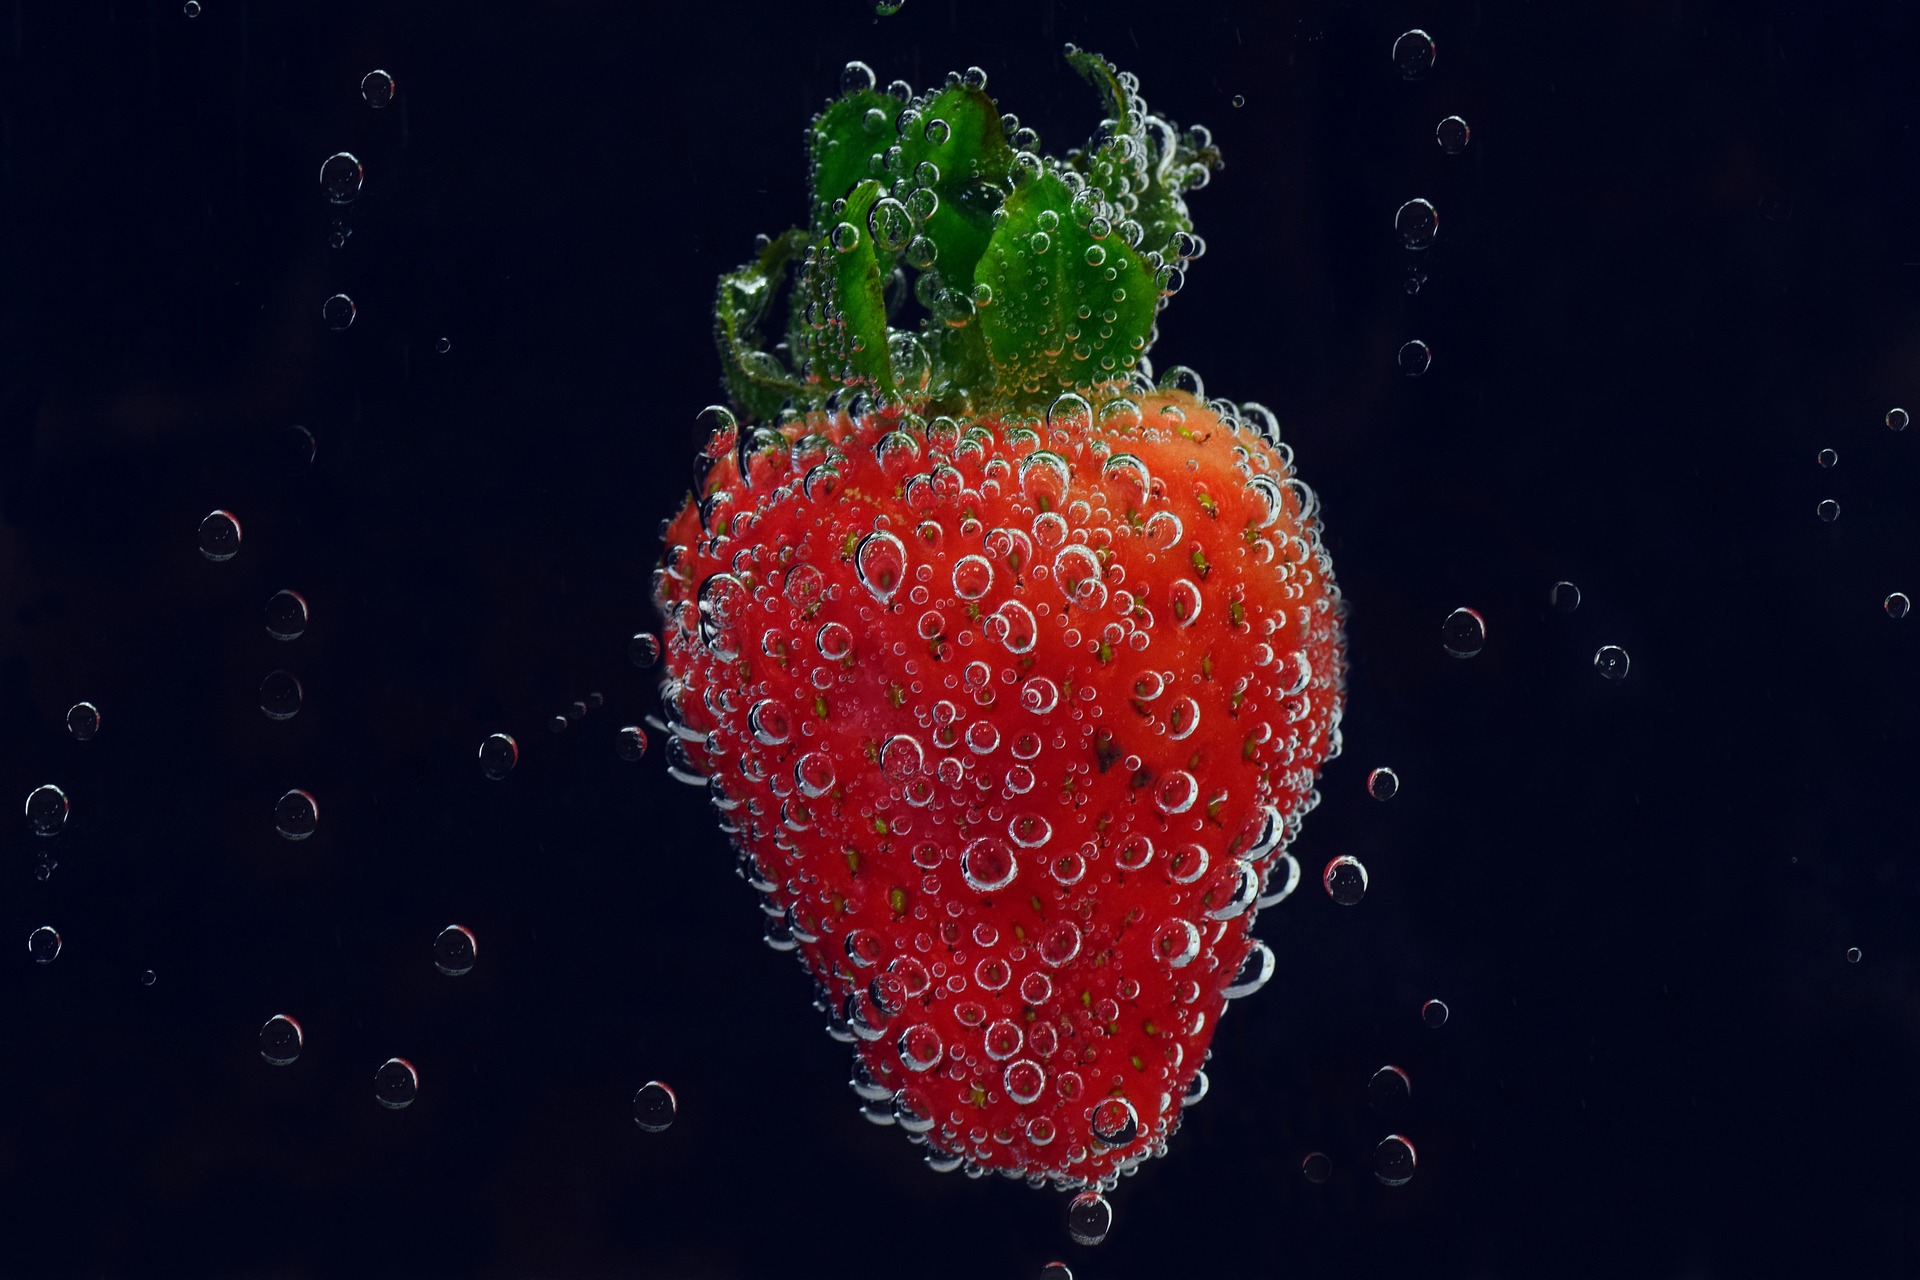 Strawberry by Ulleo on Pixabay